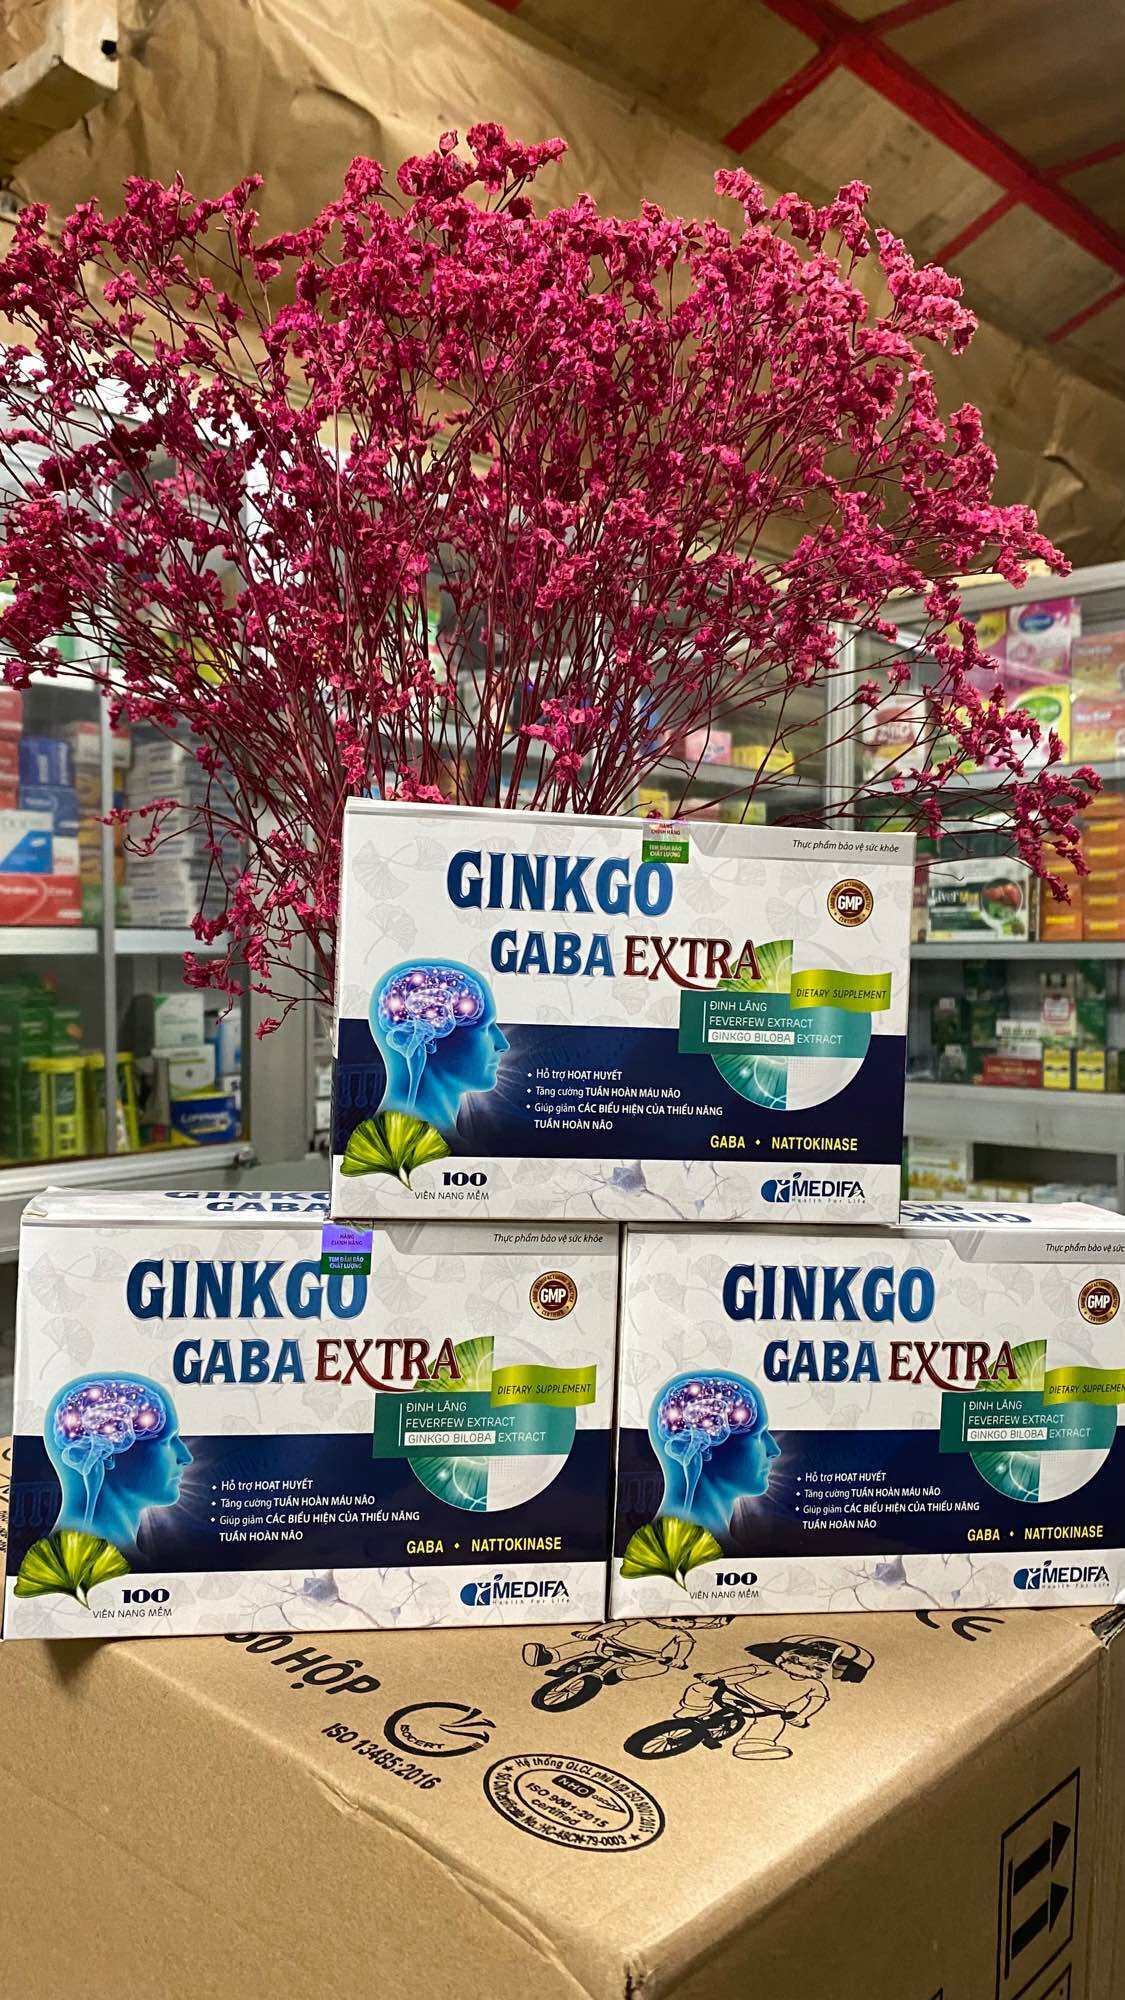 Ginkgo GaBa extra